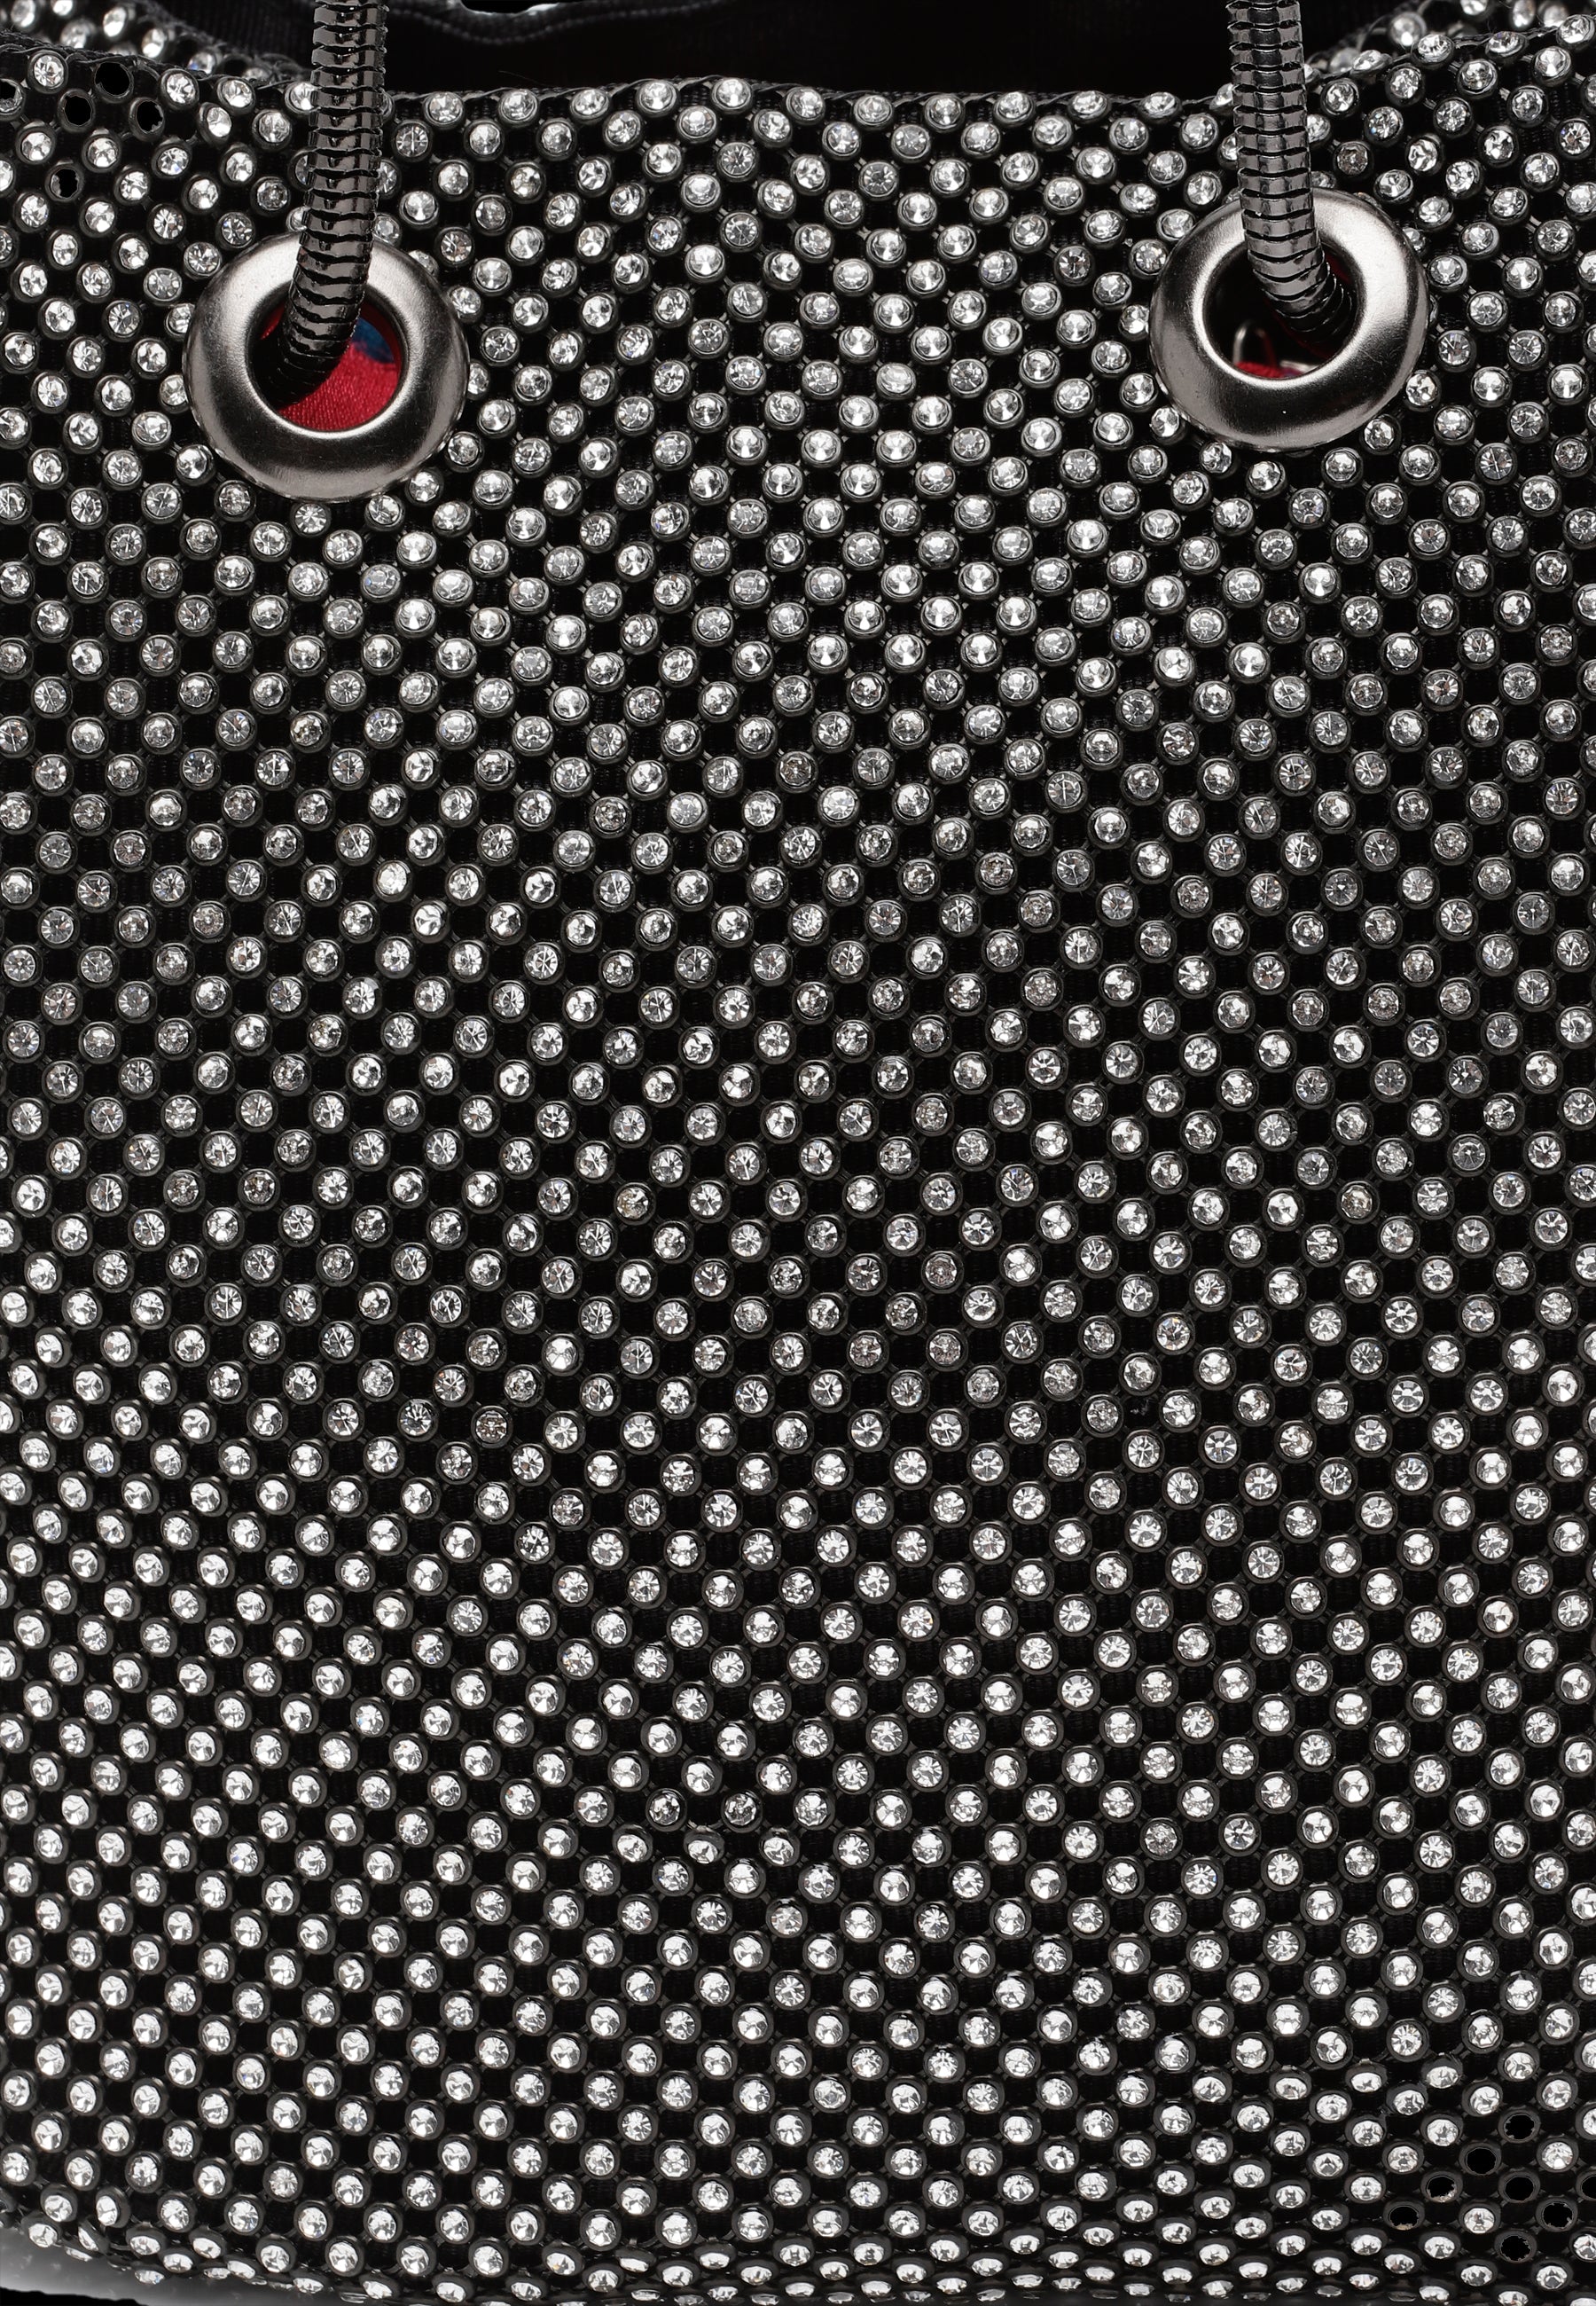 Avant-Garde Paris Black Shimmery Shoulder Clutch